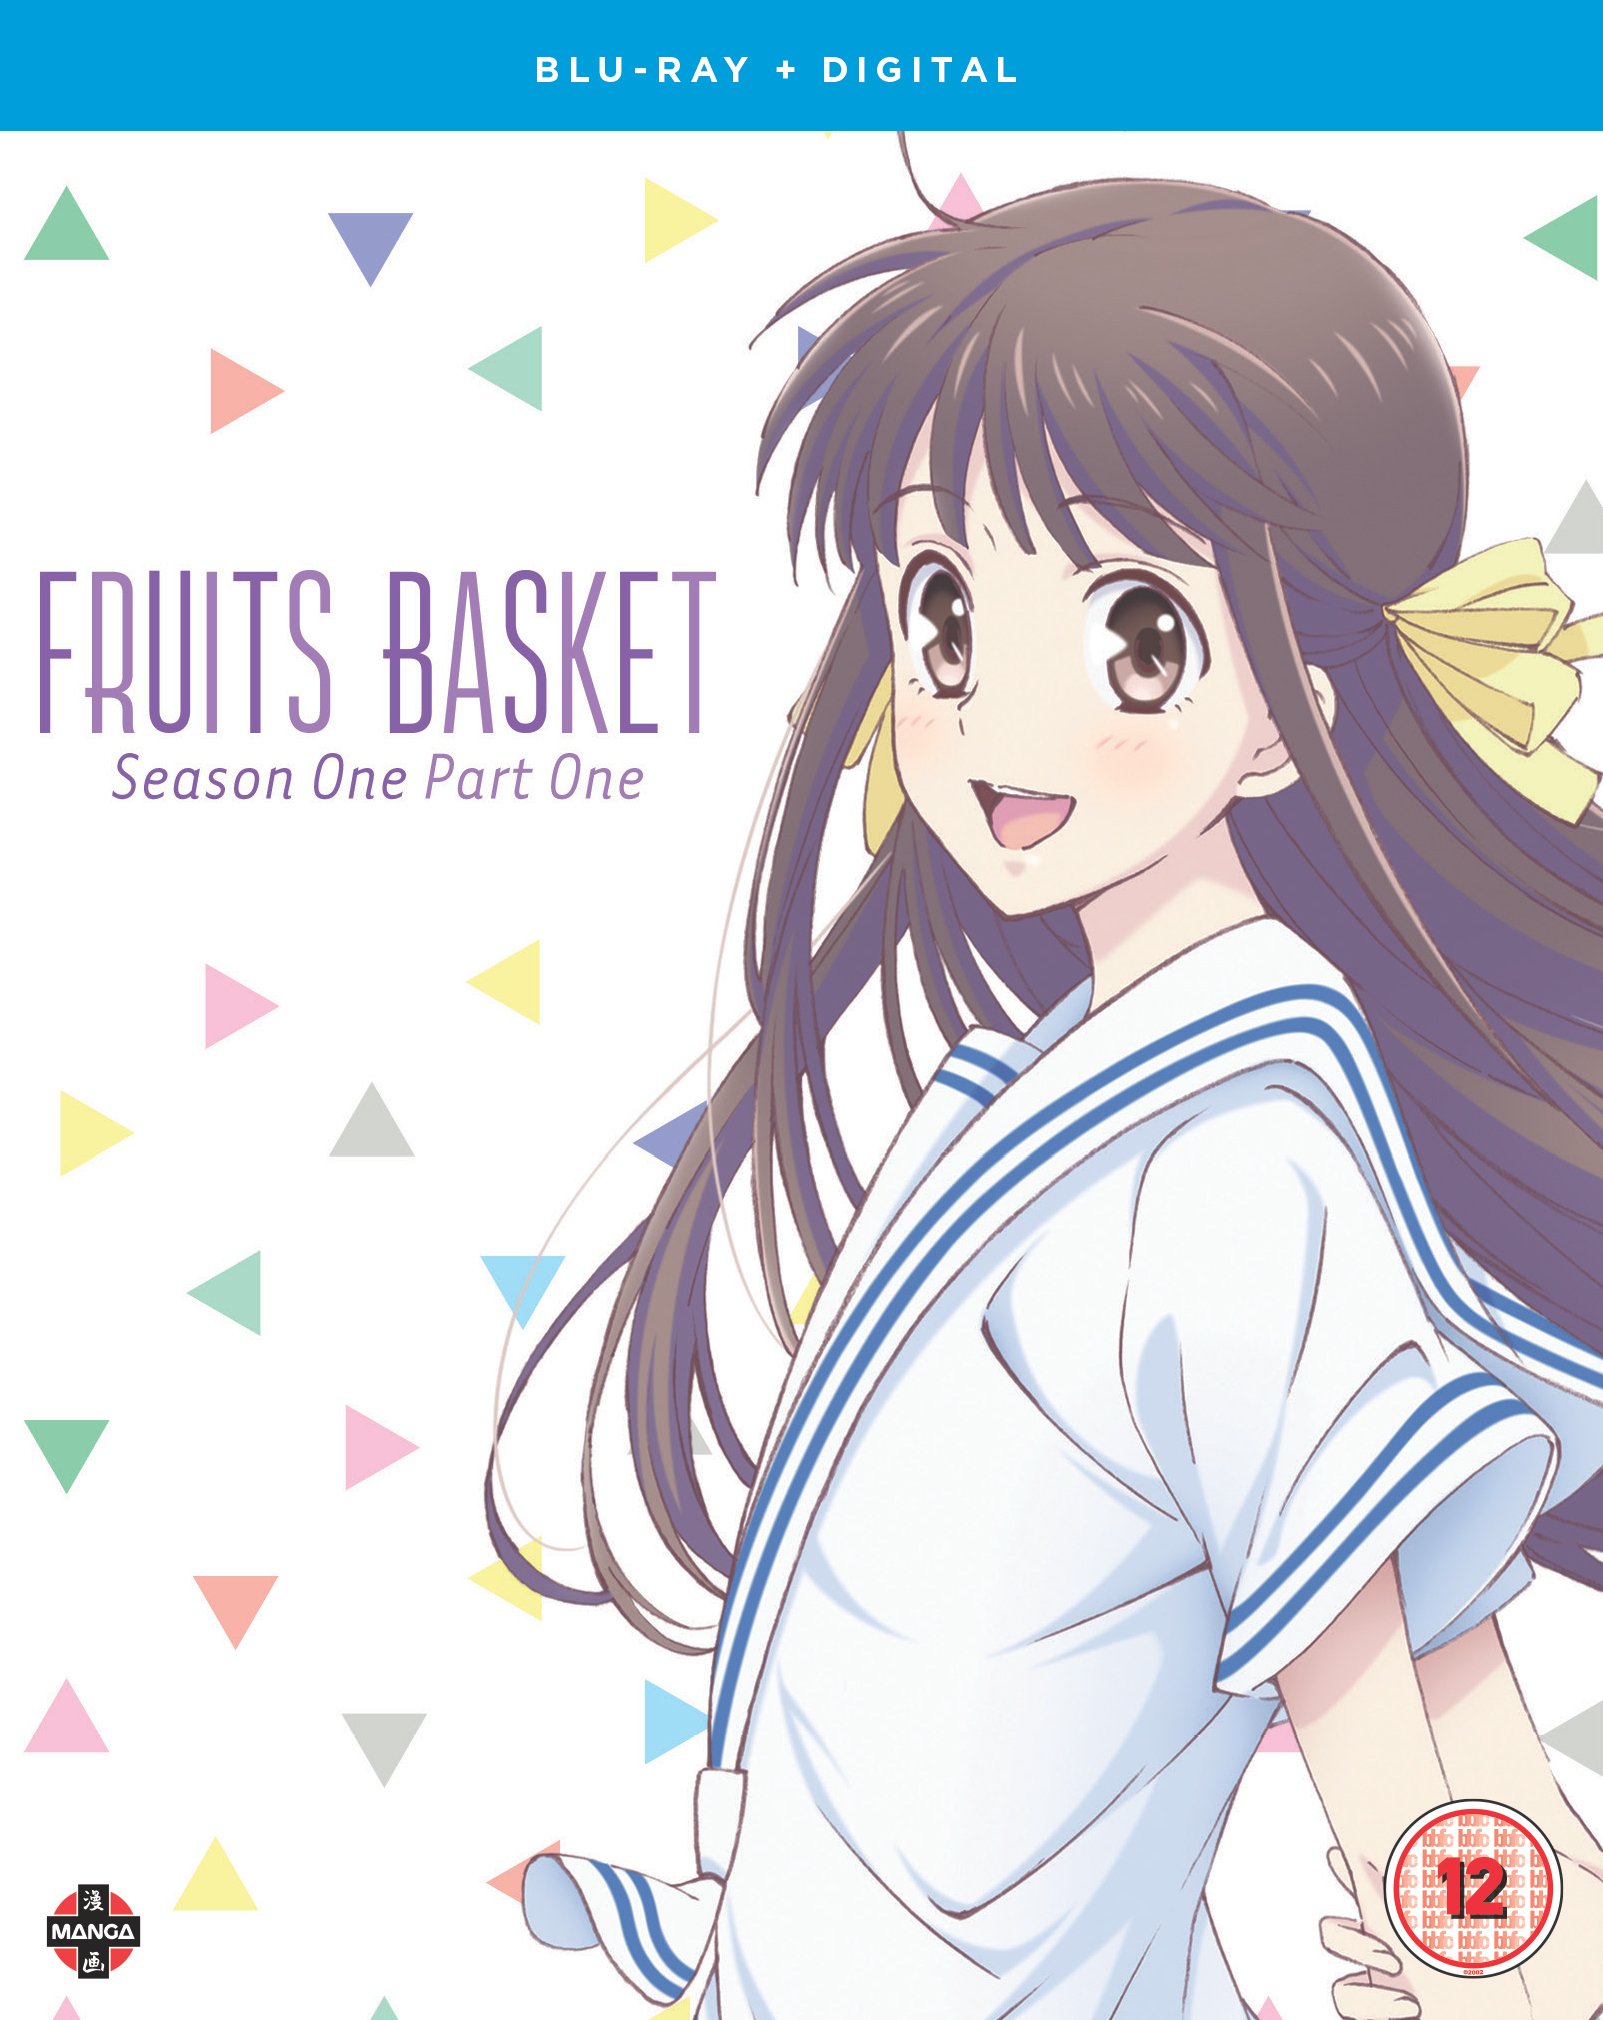 Fruits Basket Season 1 Part 1 Review • Anime UK News